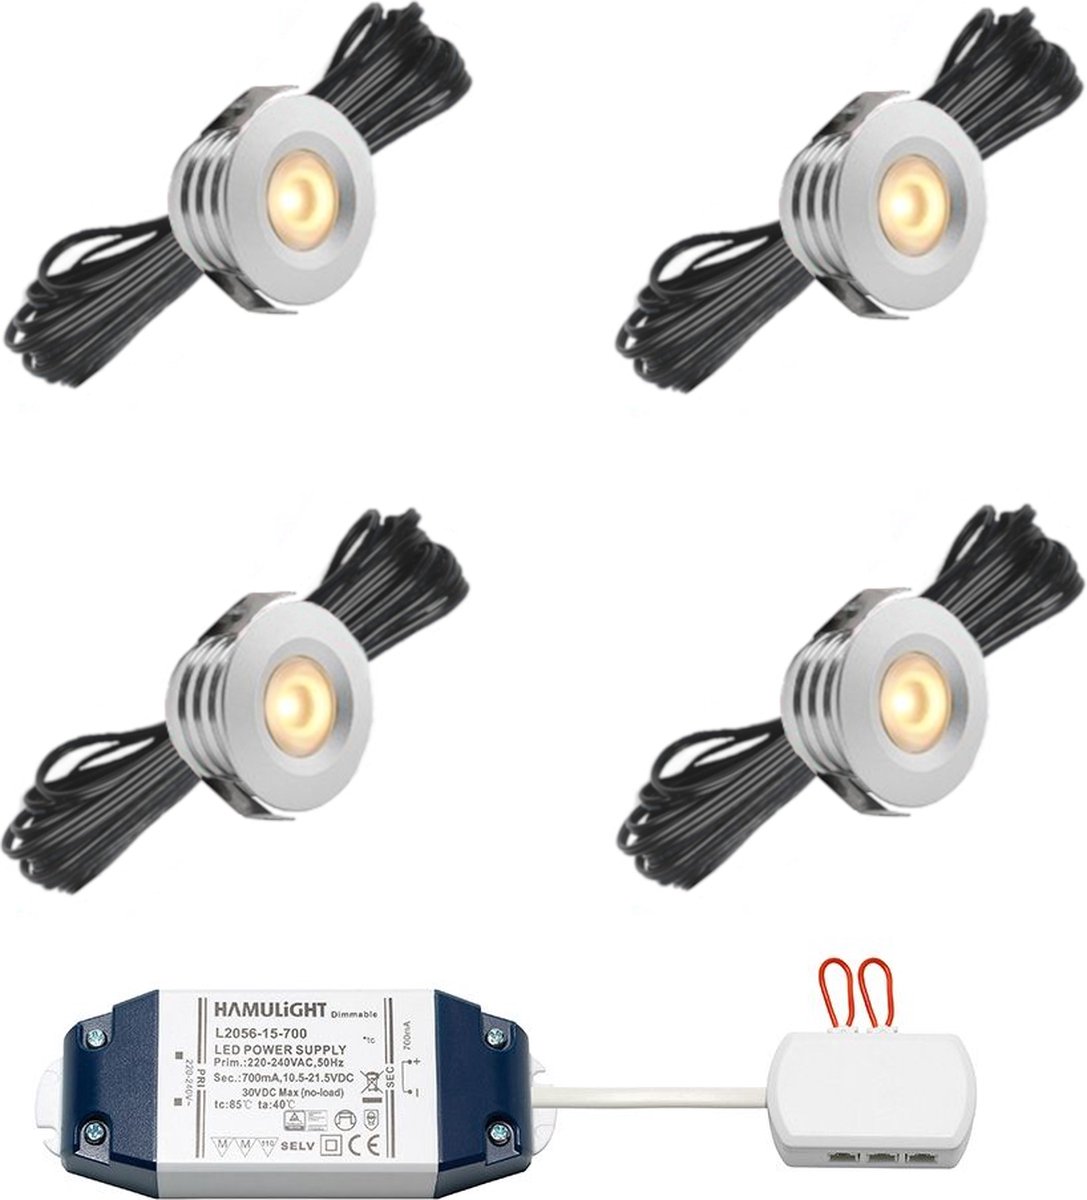 LED inbouwspot Pals bas inclusief trafo - inbouwspots / downlights / plafondspots / led spot / 3W / dimbaar / warm wit / rond / 230V / IP44 / - set van 4 stuks